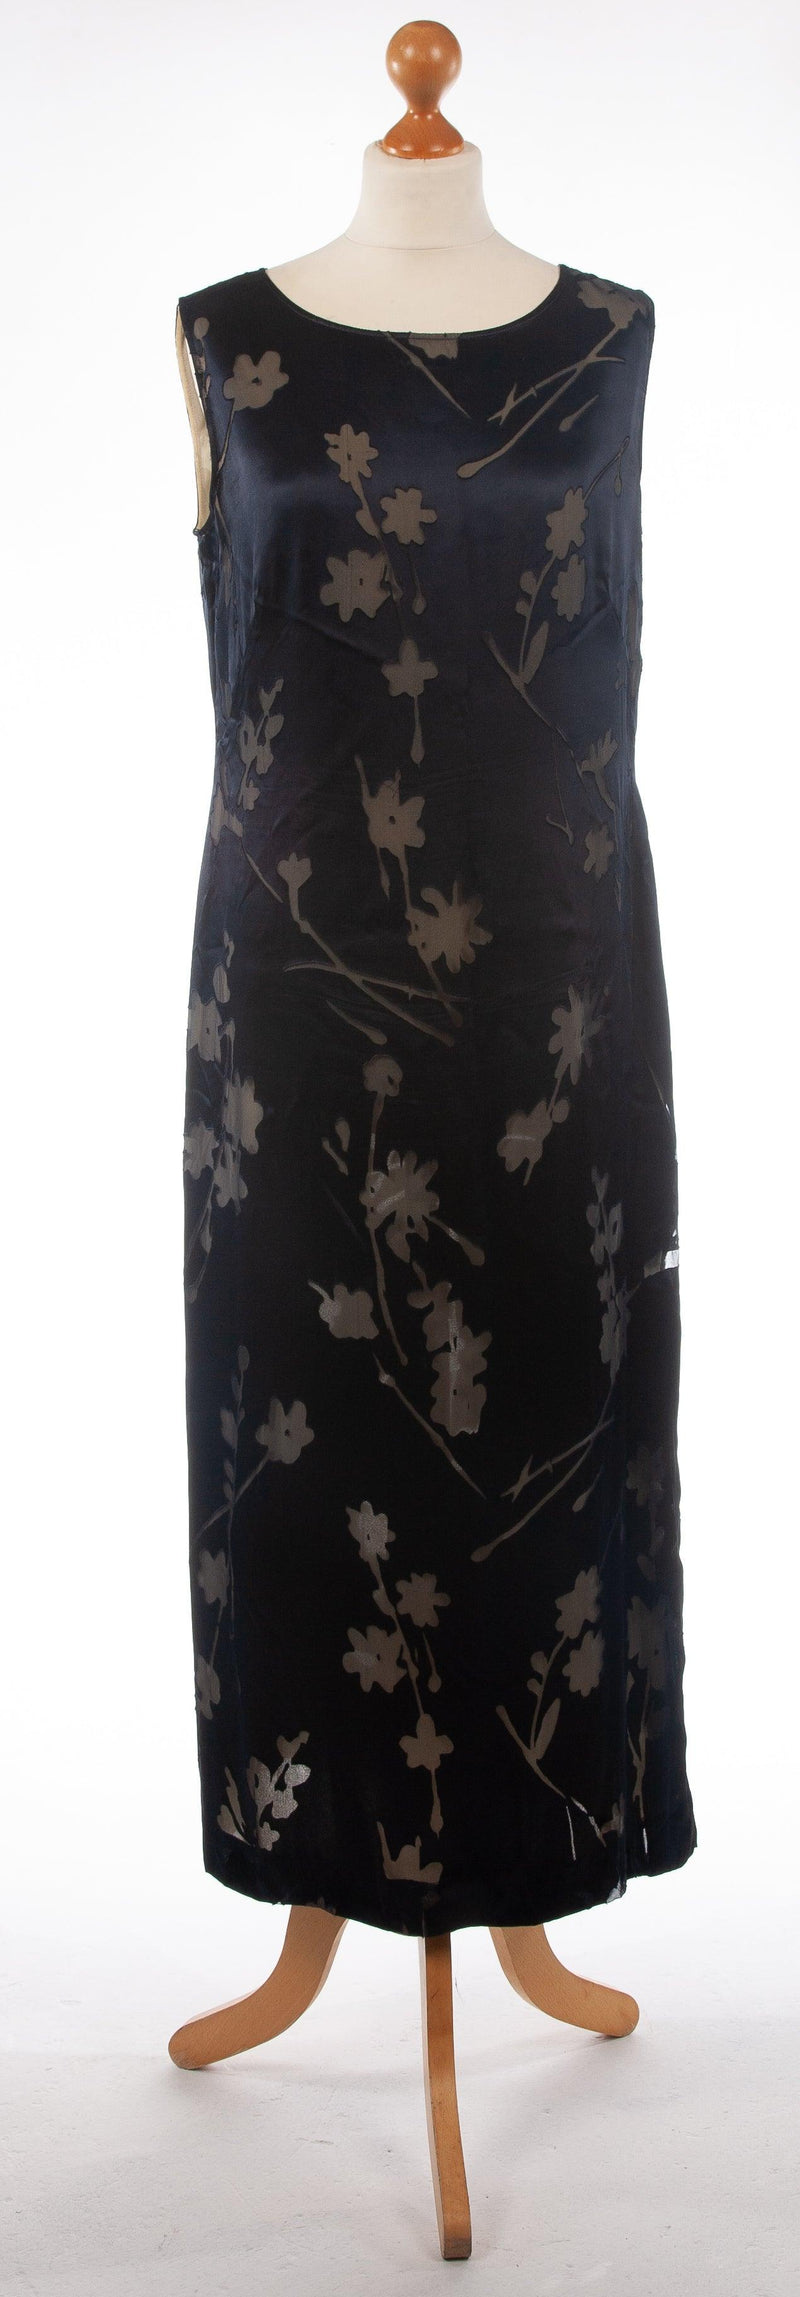 My Time Sleeveless Overlay Dress Dark Blue with Floral Design UK 14 - Ava & Iva